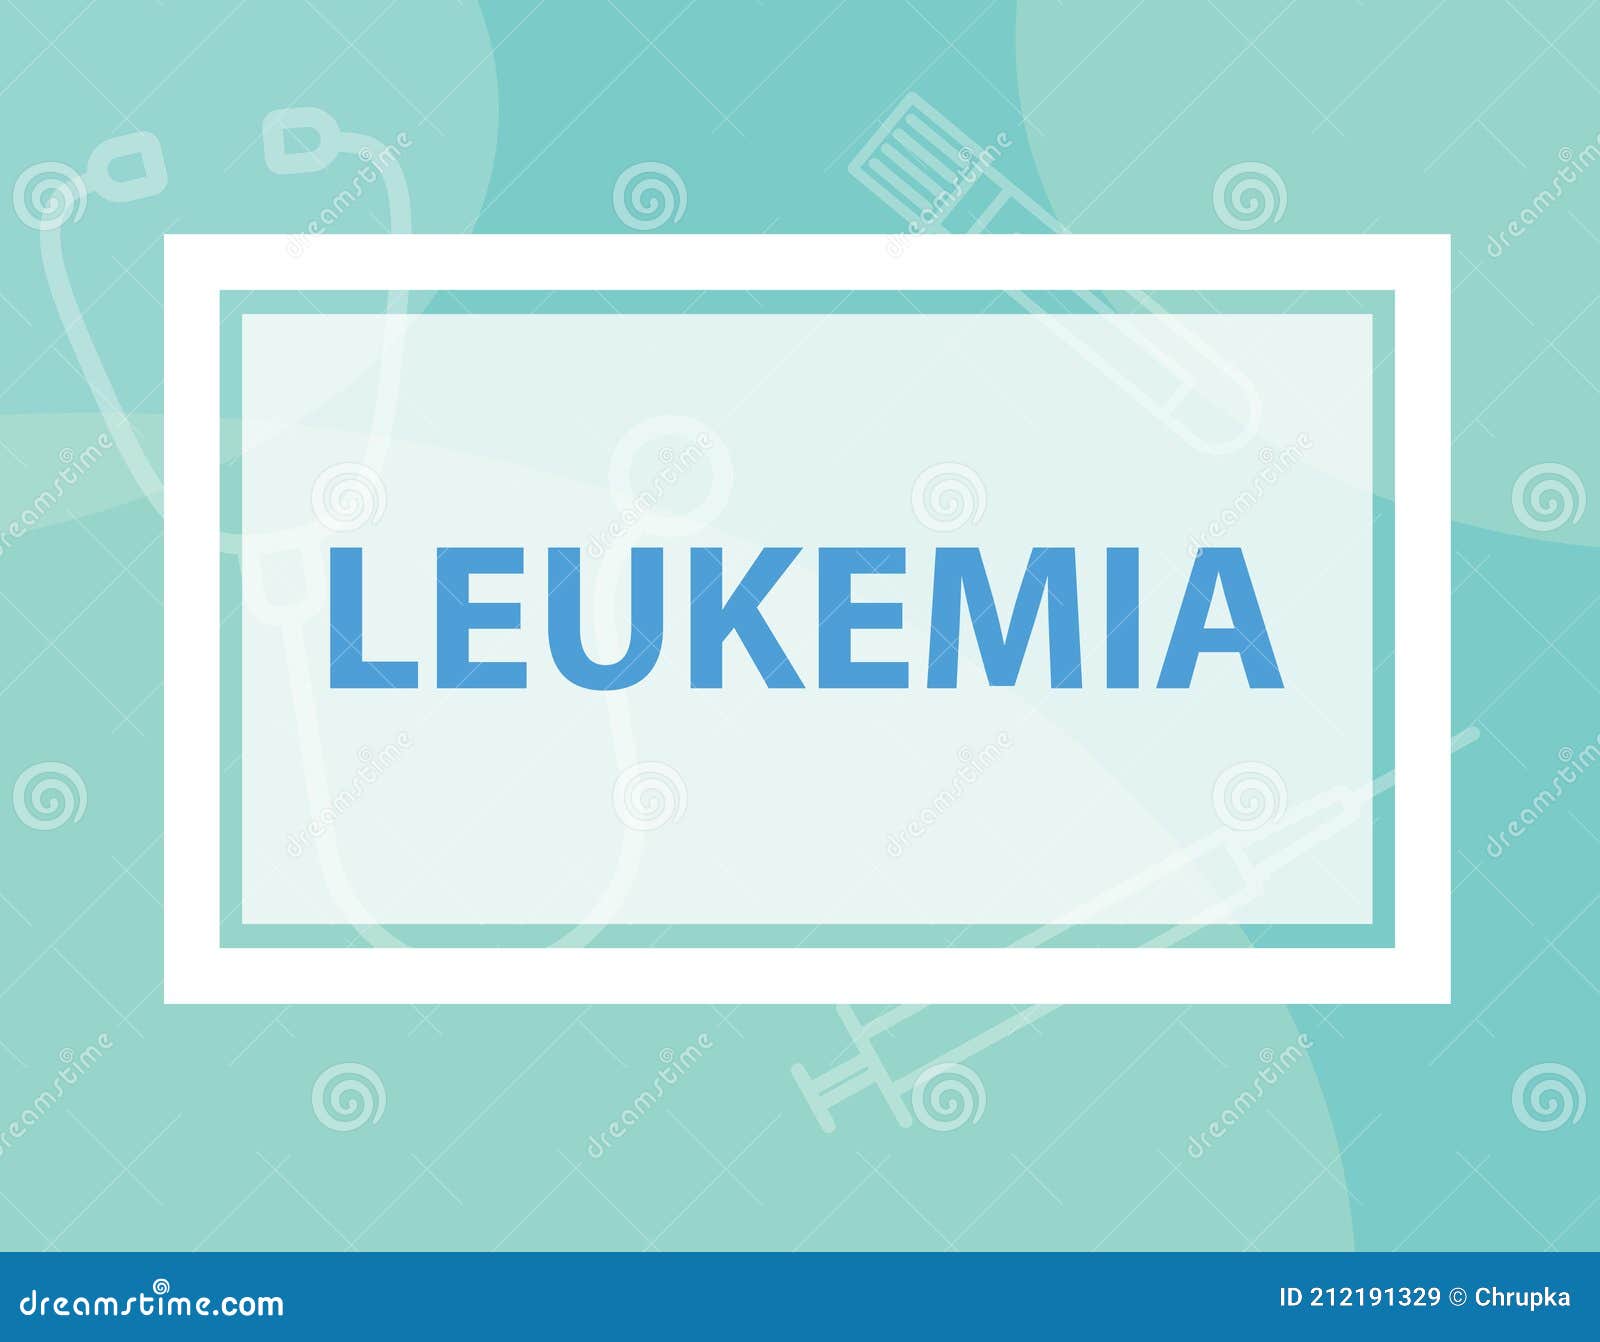 Leukemia Disease Concept Stock Vector Illustration Of Health 212191329